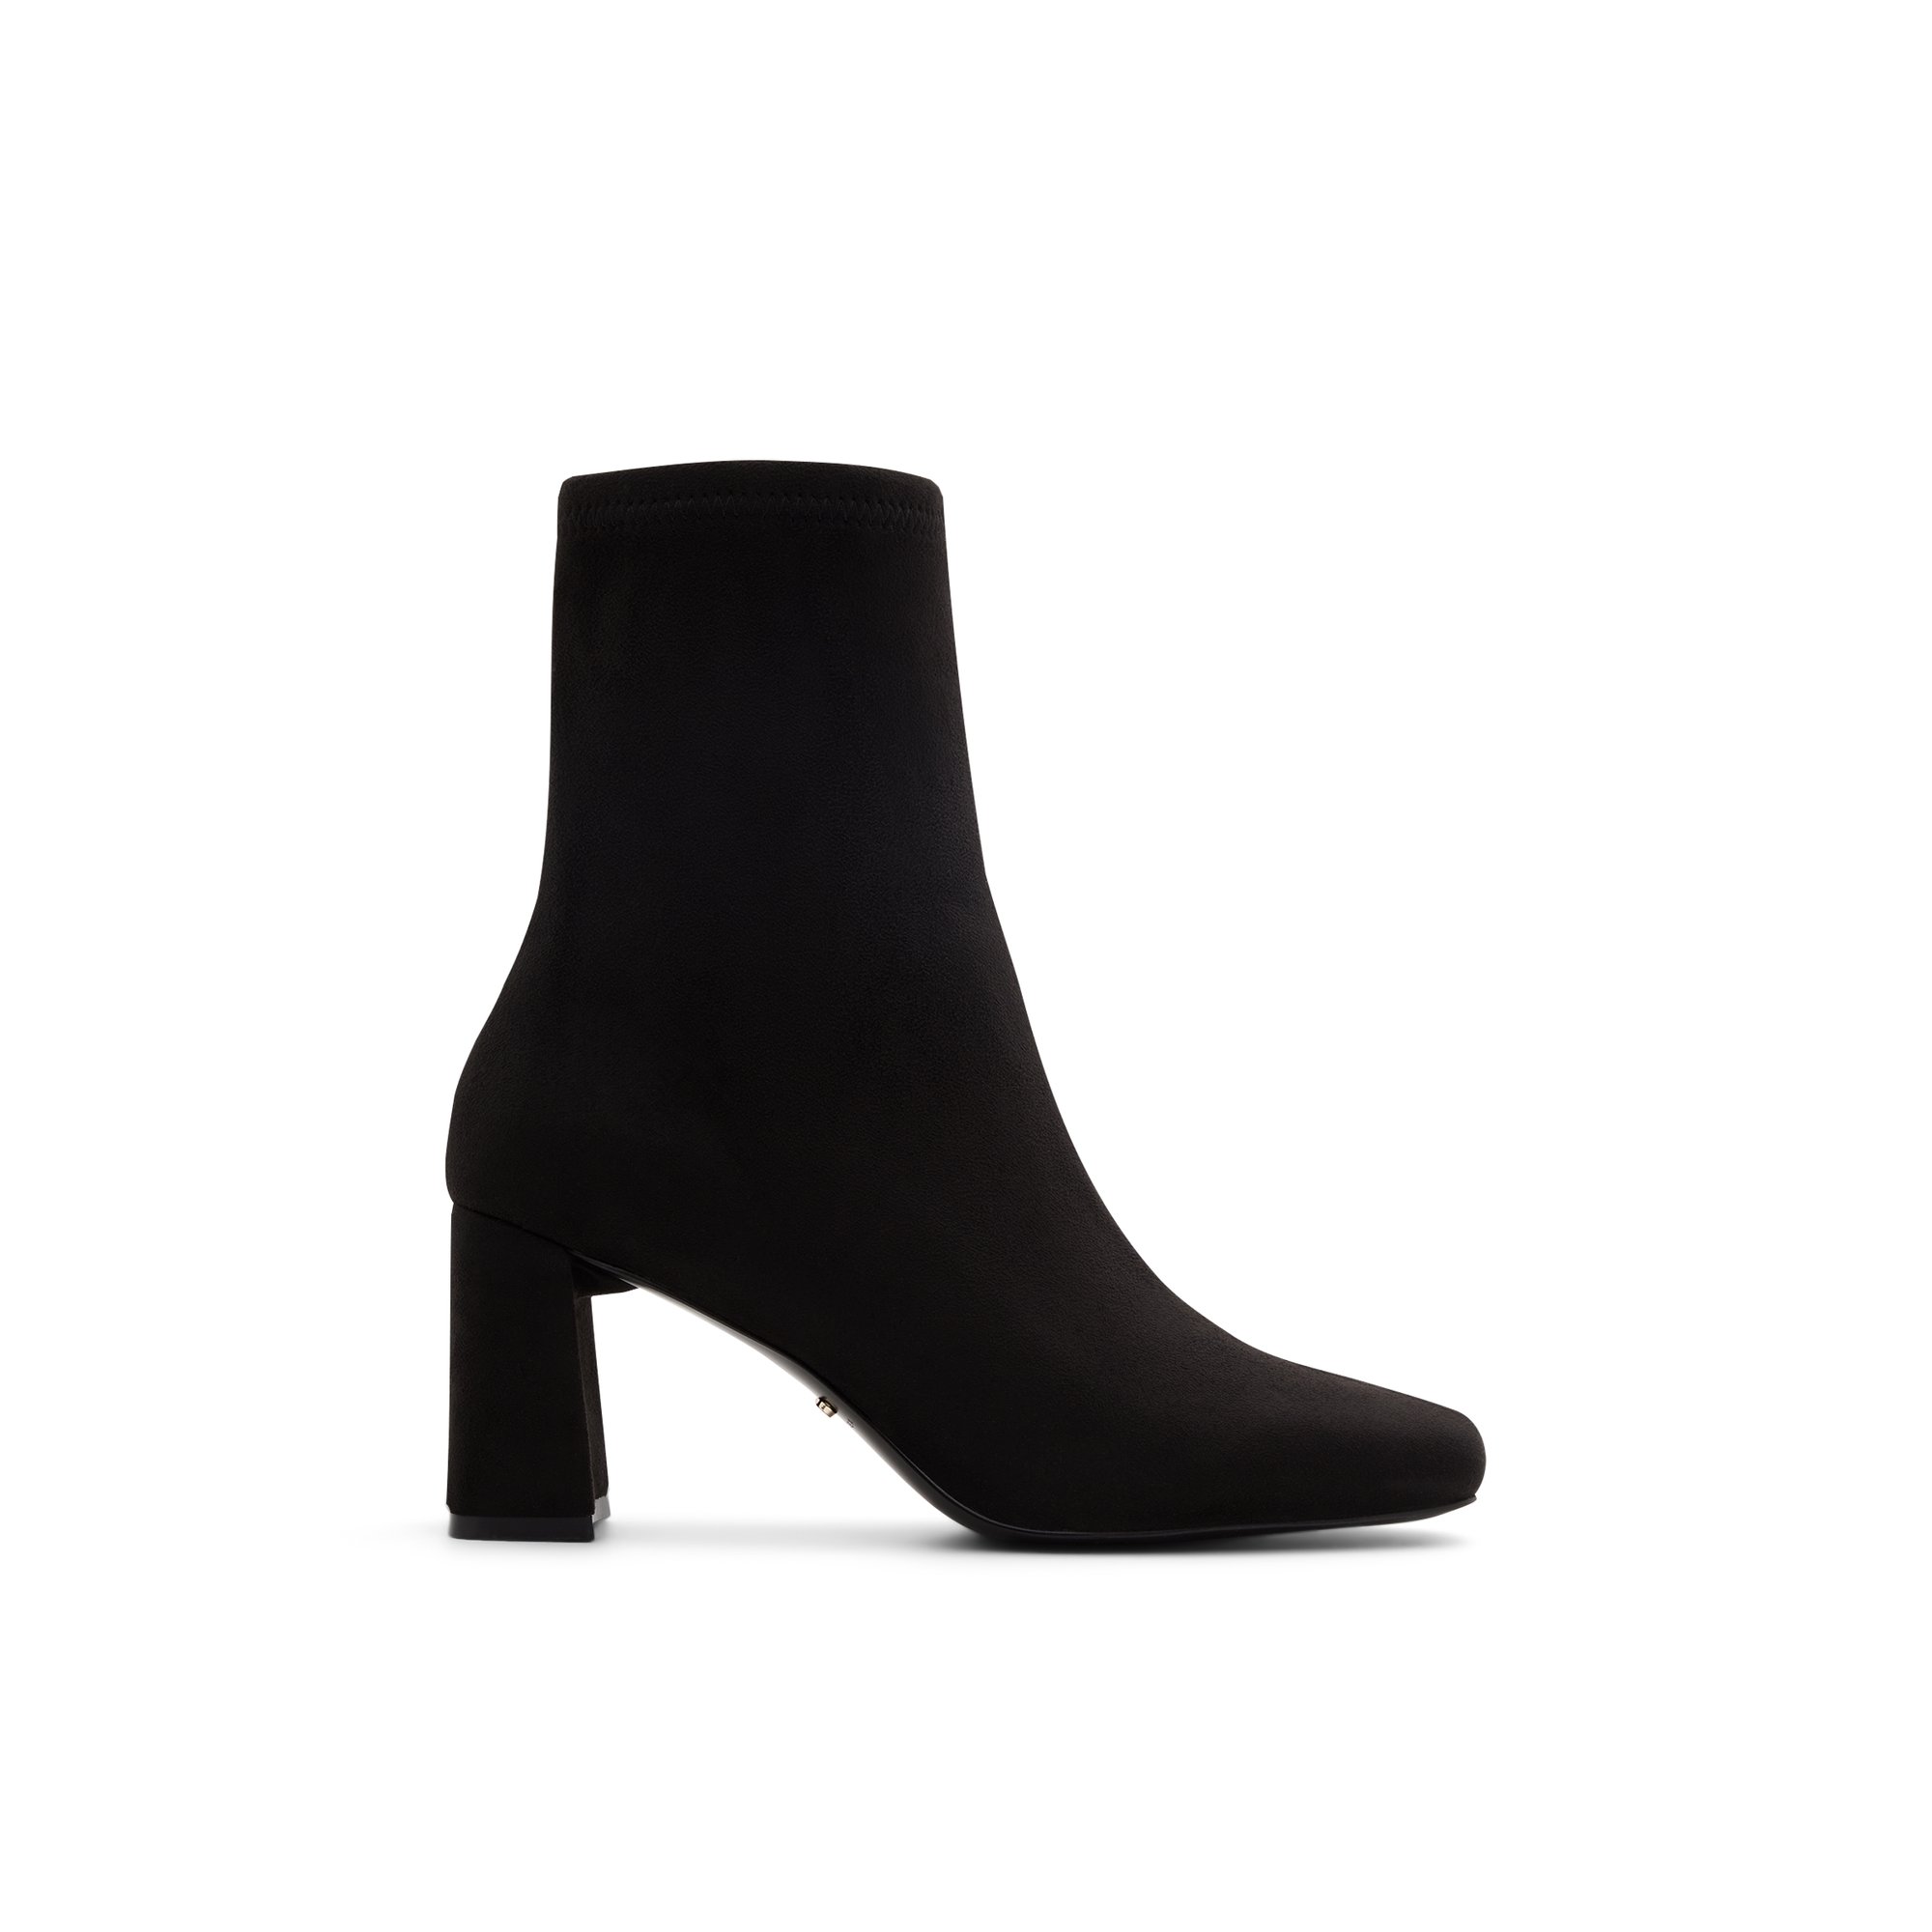 ALDO Marcella - Women's Boots Ankle - Black